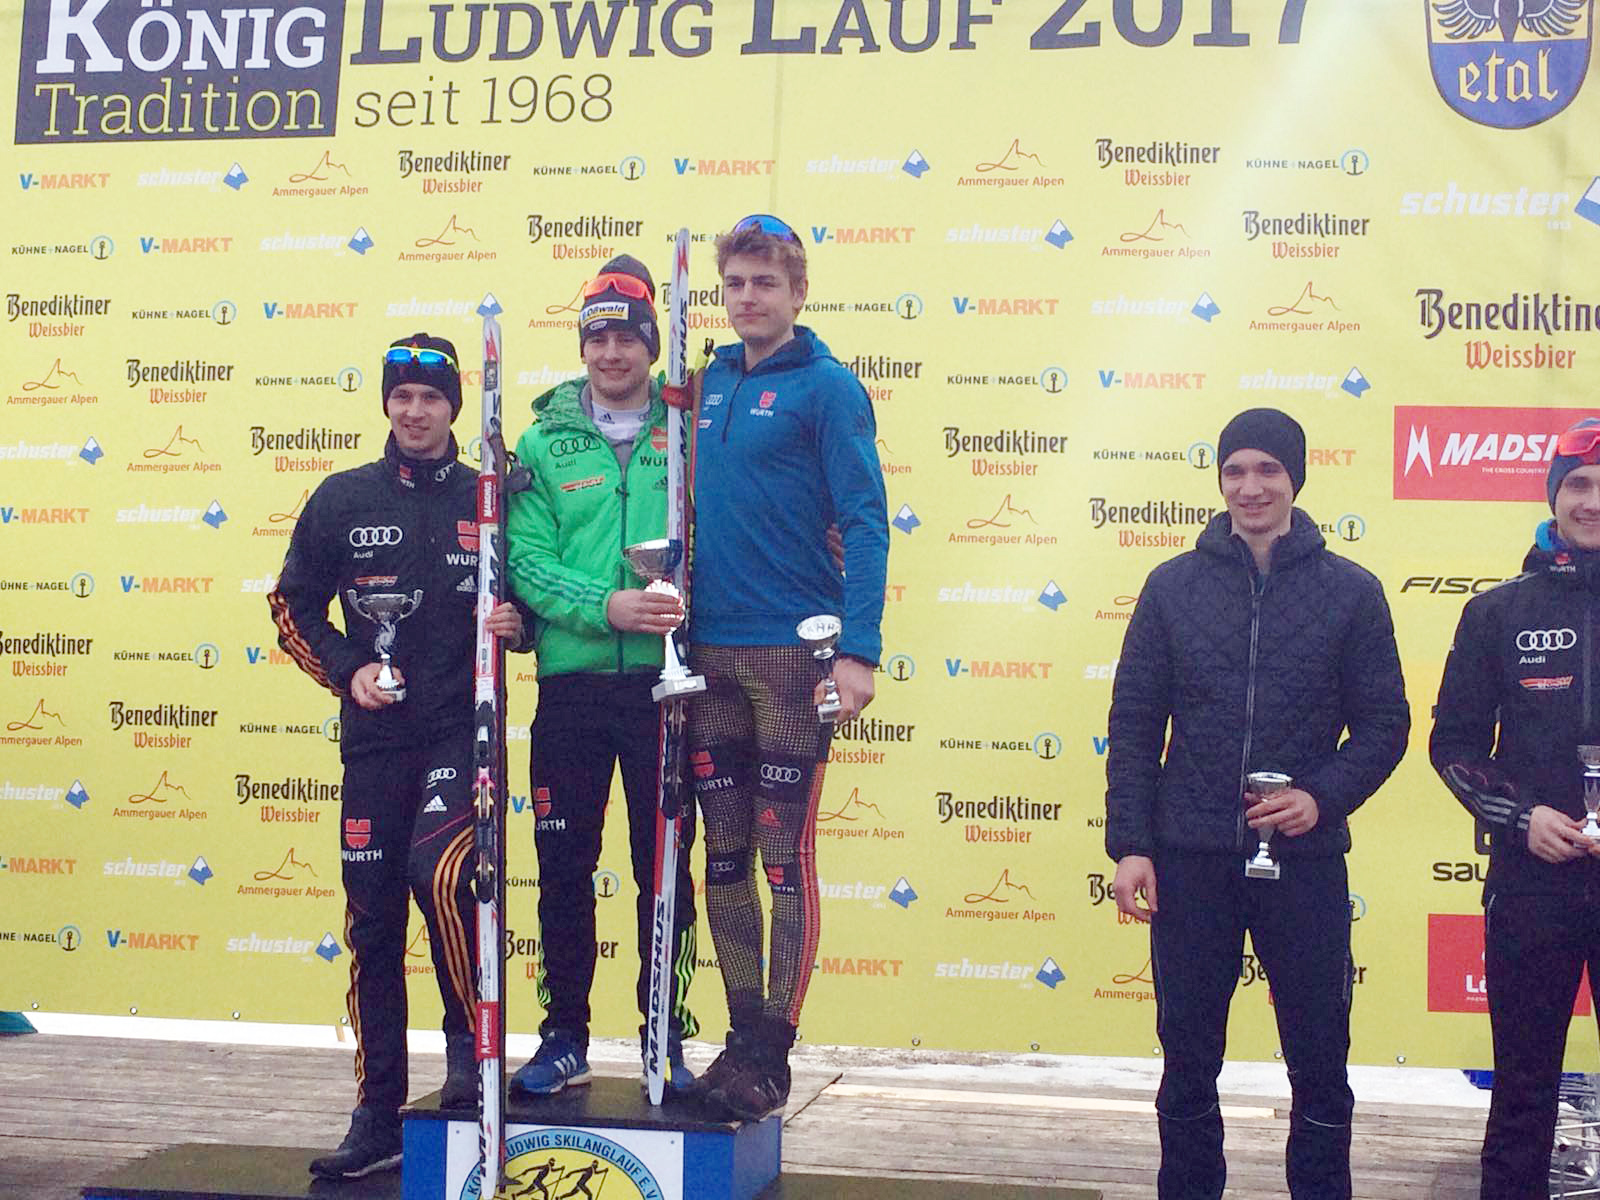 König Ludwig Lauf 2017